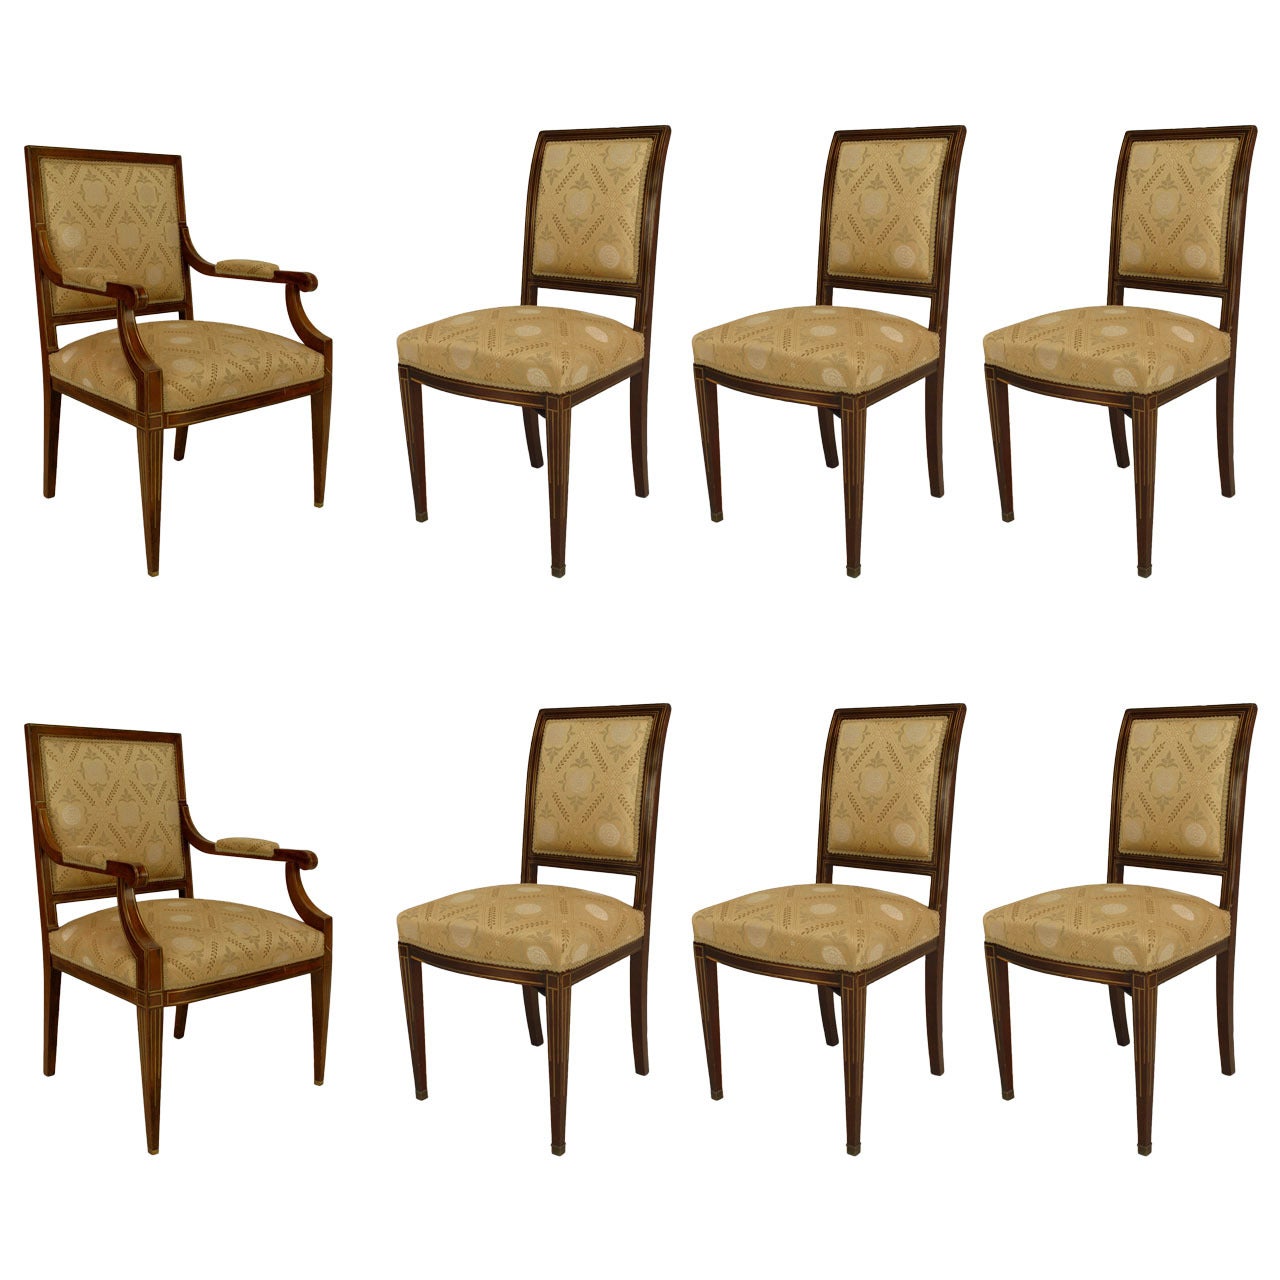 Set of 8 Continental Baltic Set of 8 Mahogany Chairs